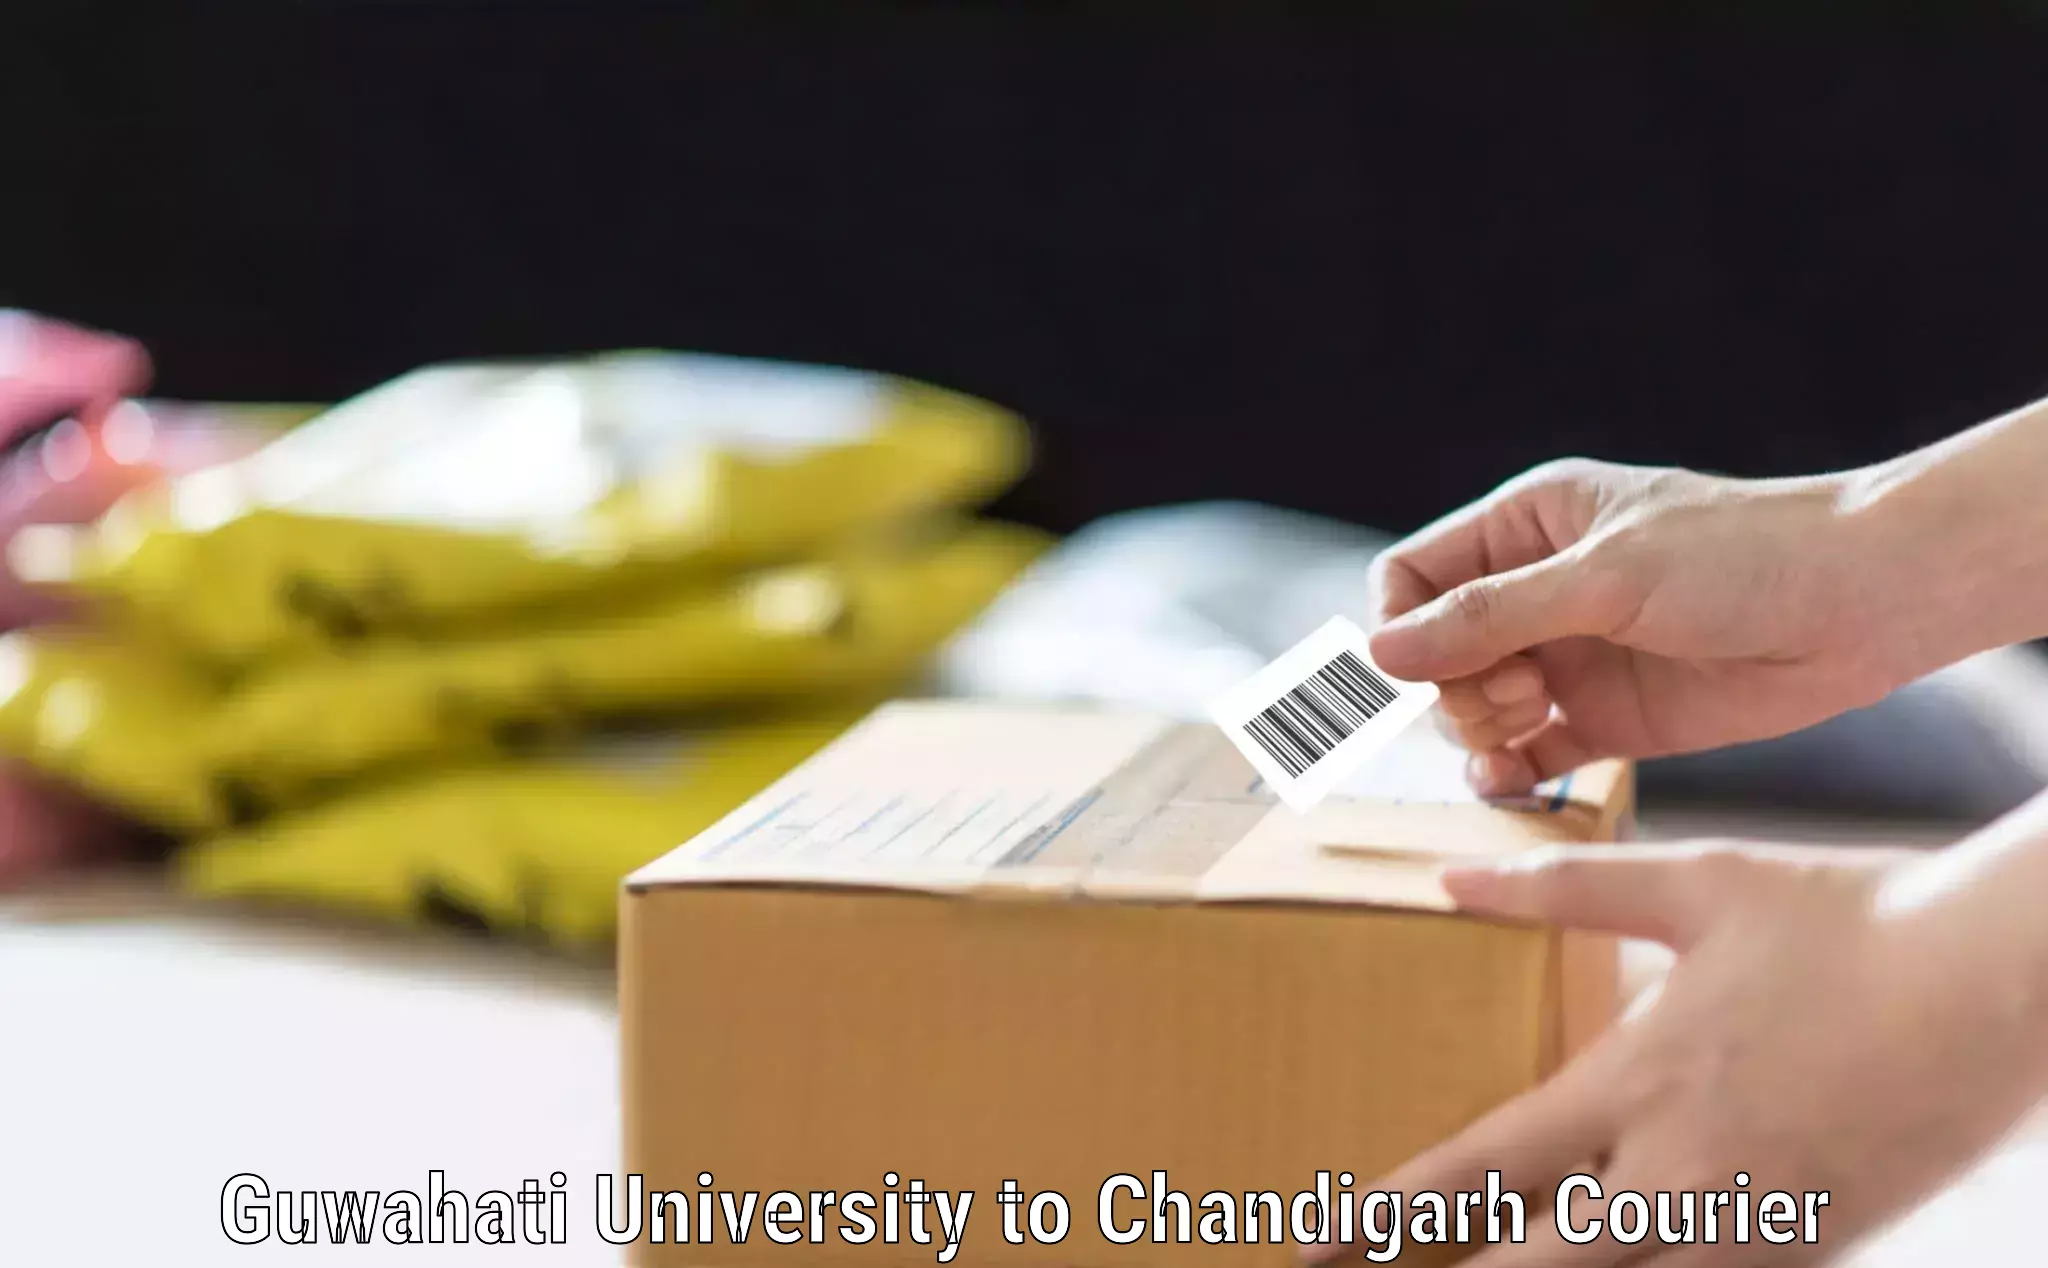 Baggage transport network Guwahati University to Chandigarh